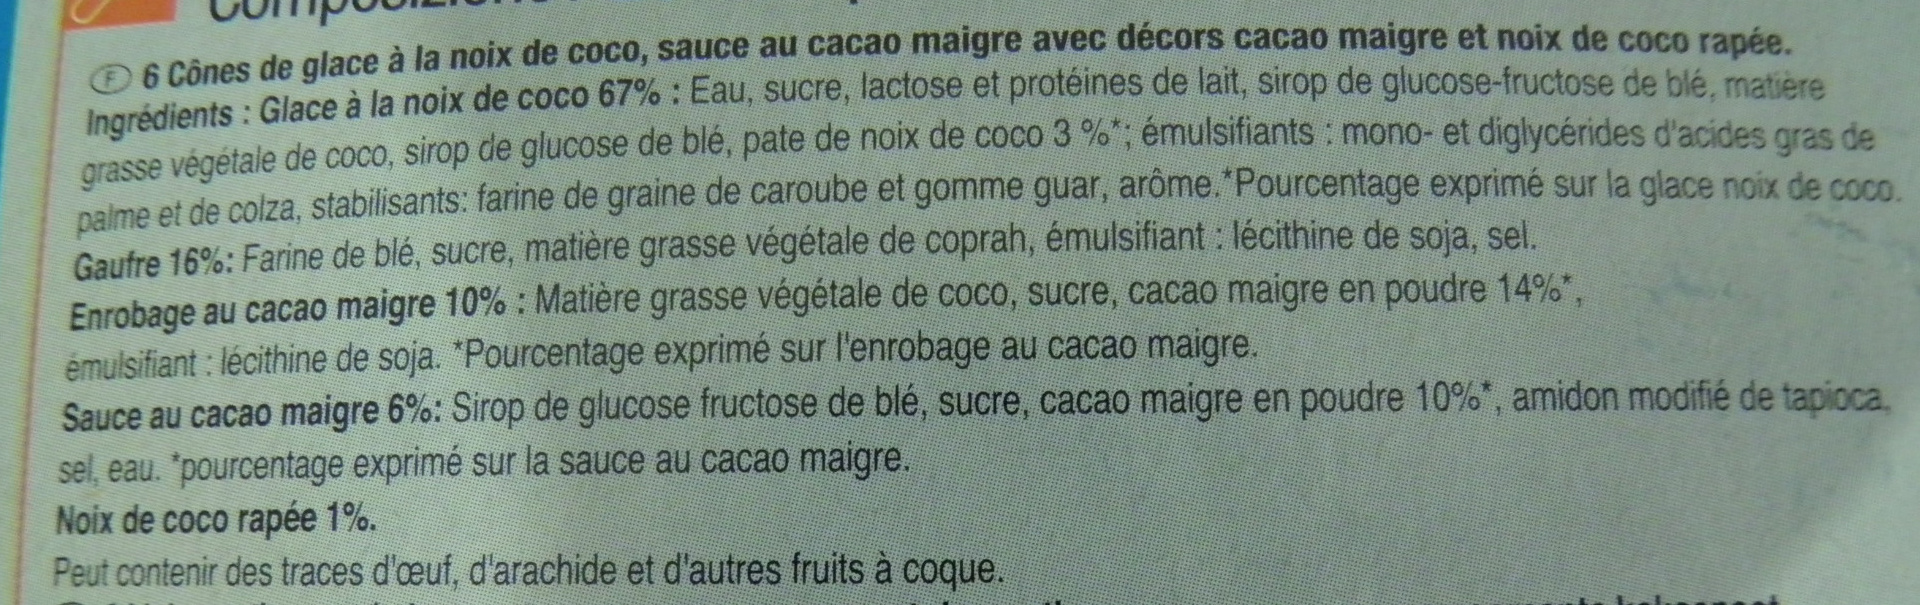 Coco - Ingredients - fr